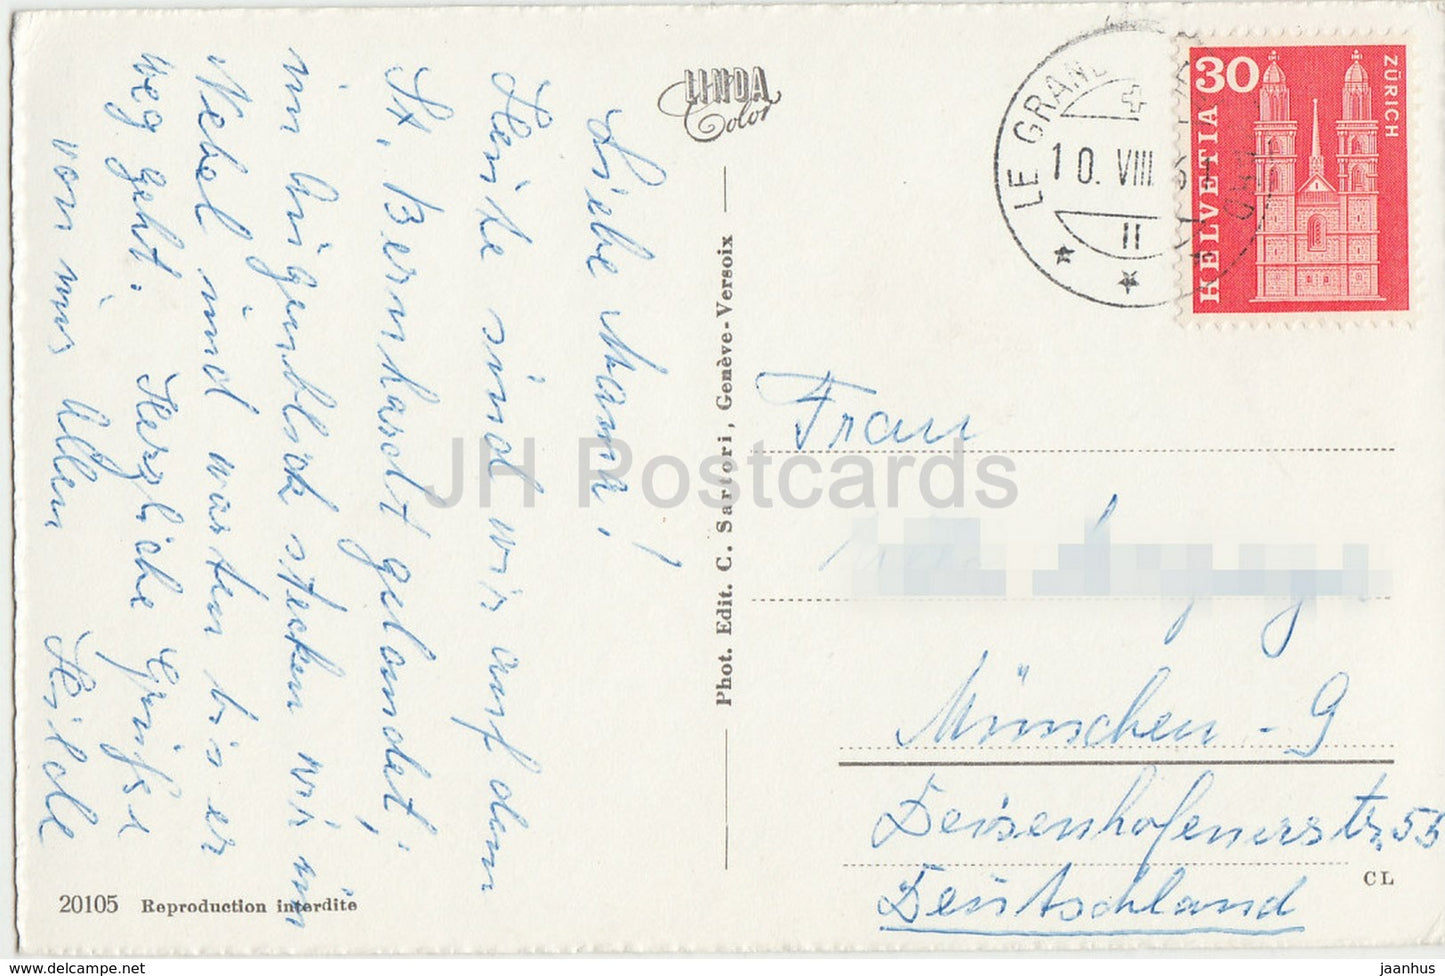 Souvenir du Grand St Bernard - dog - 1961 - Switzerland - used